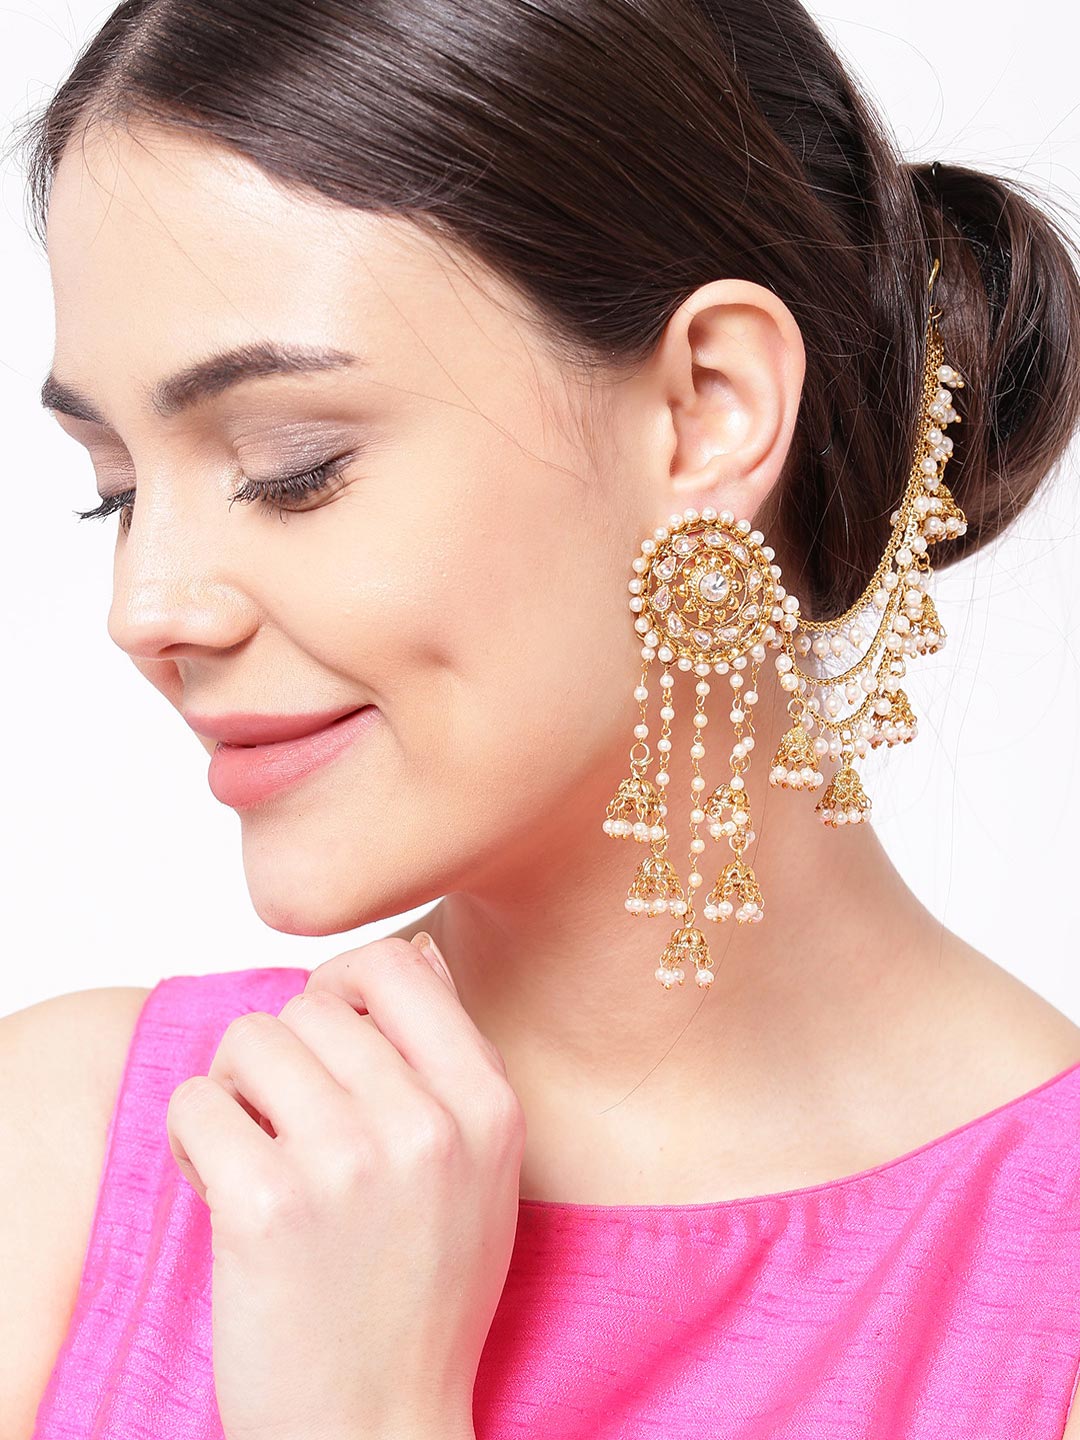 Long American Diamond Earrings for Girls - Partywear Earrings - Evaline  Long Earrings by Blingvine